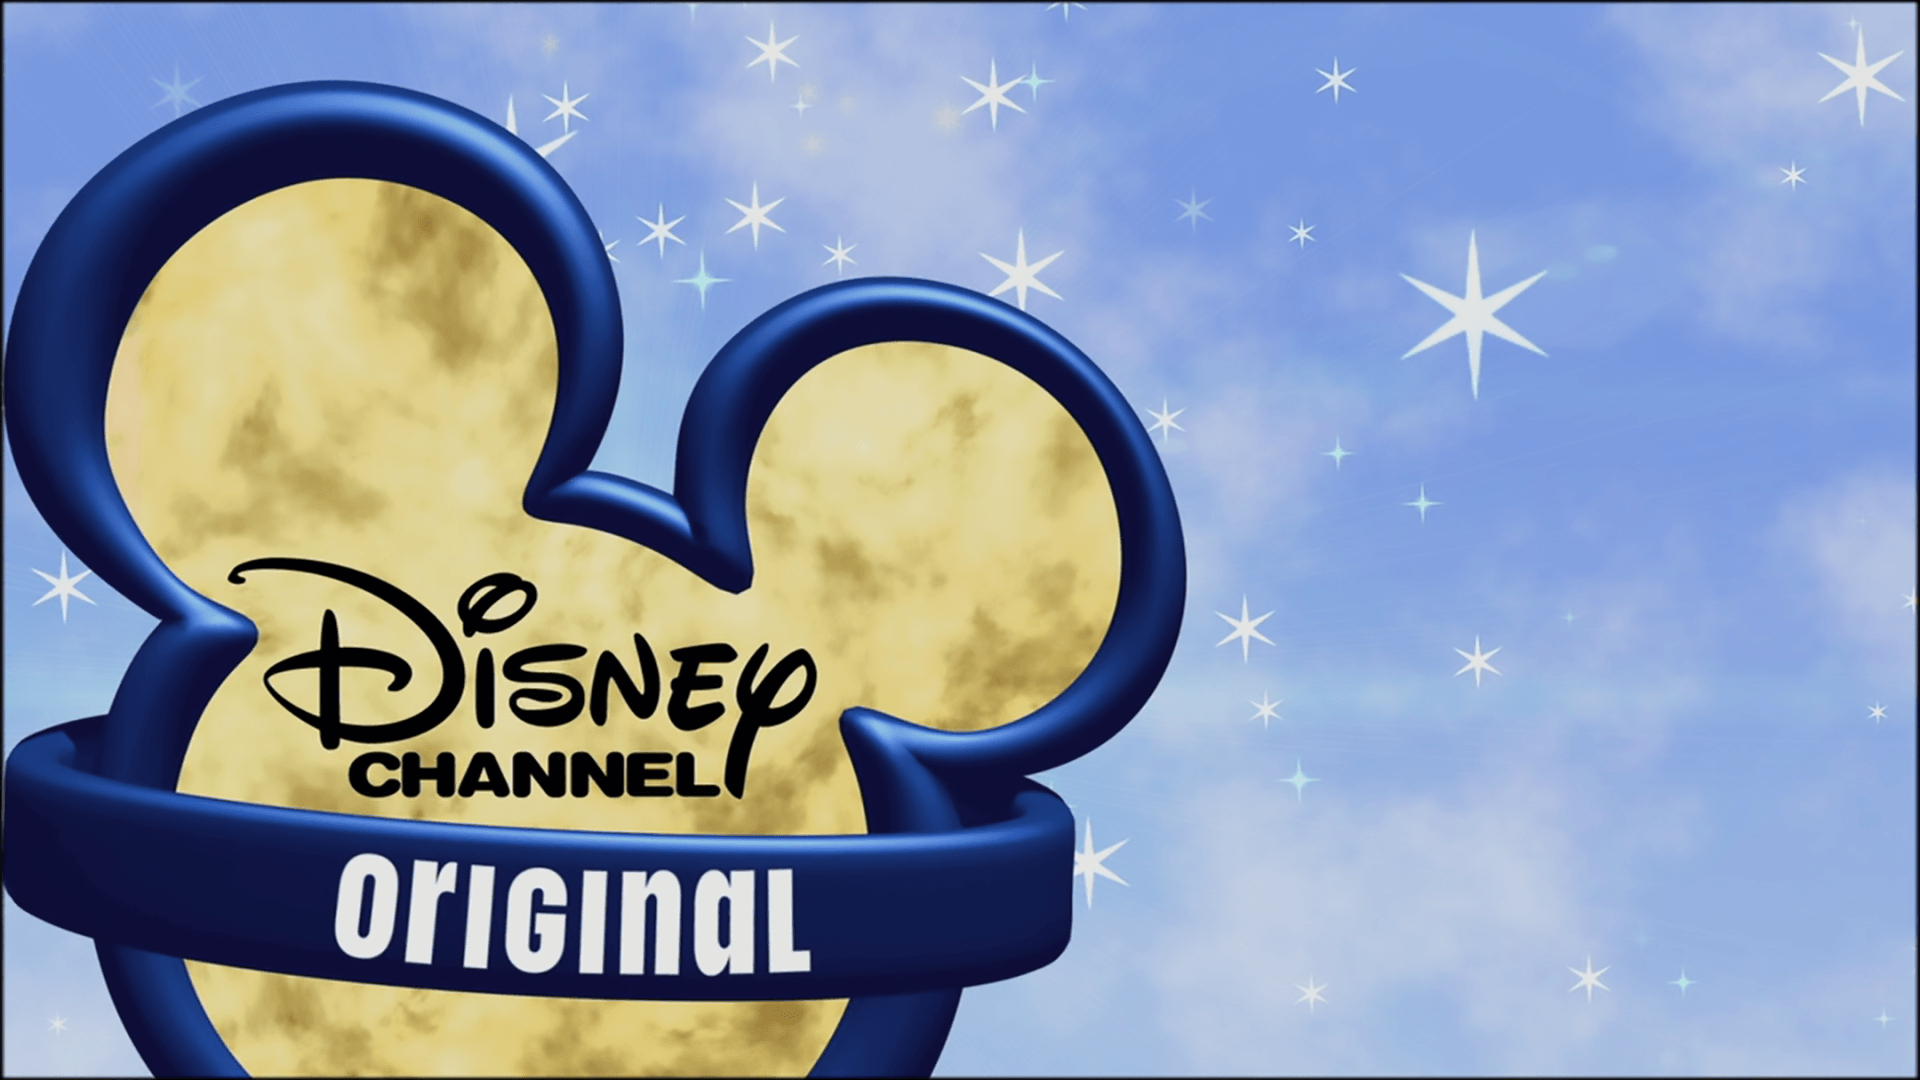 Playhouse Disney Channel Original Logo - Image - Disney Channel Original 2007 16 Wishes.png | Logopedia ...